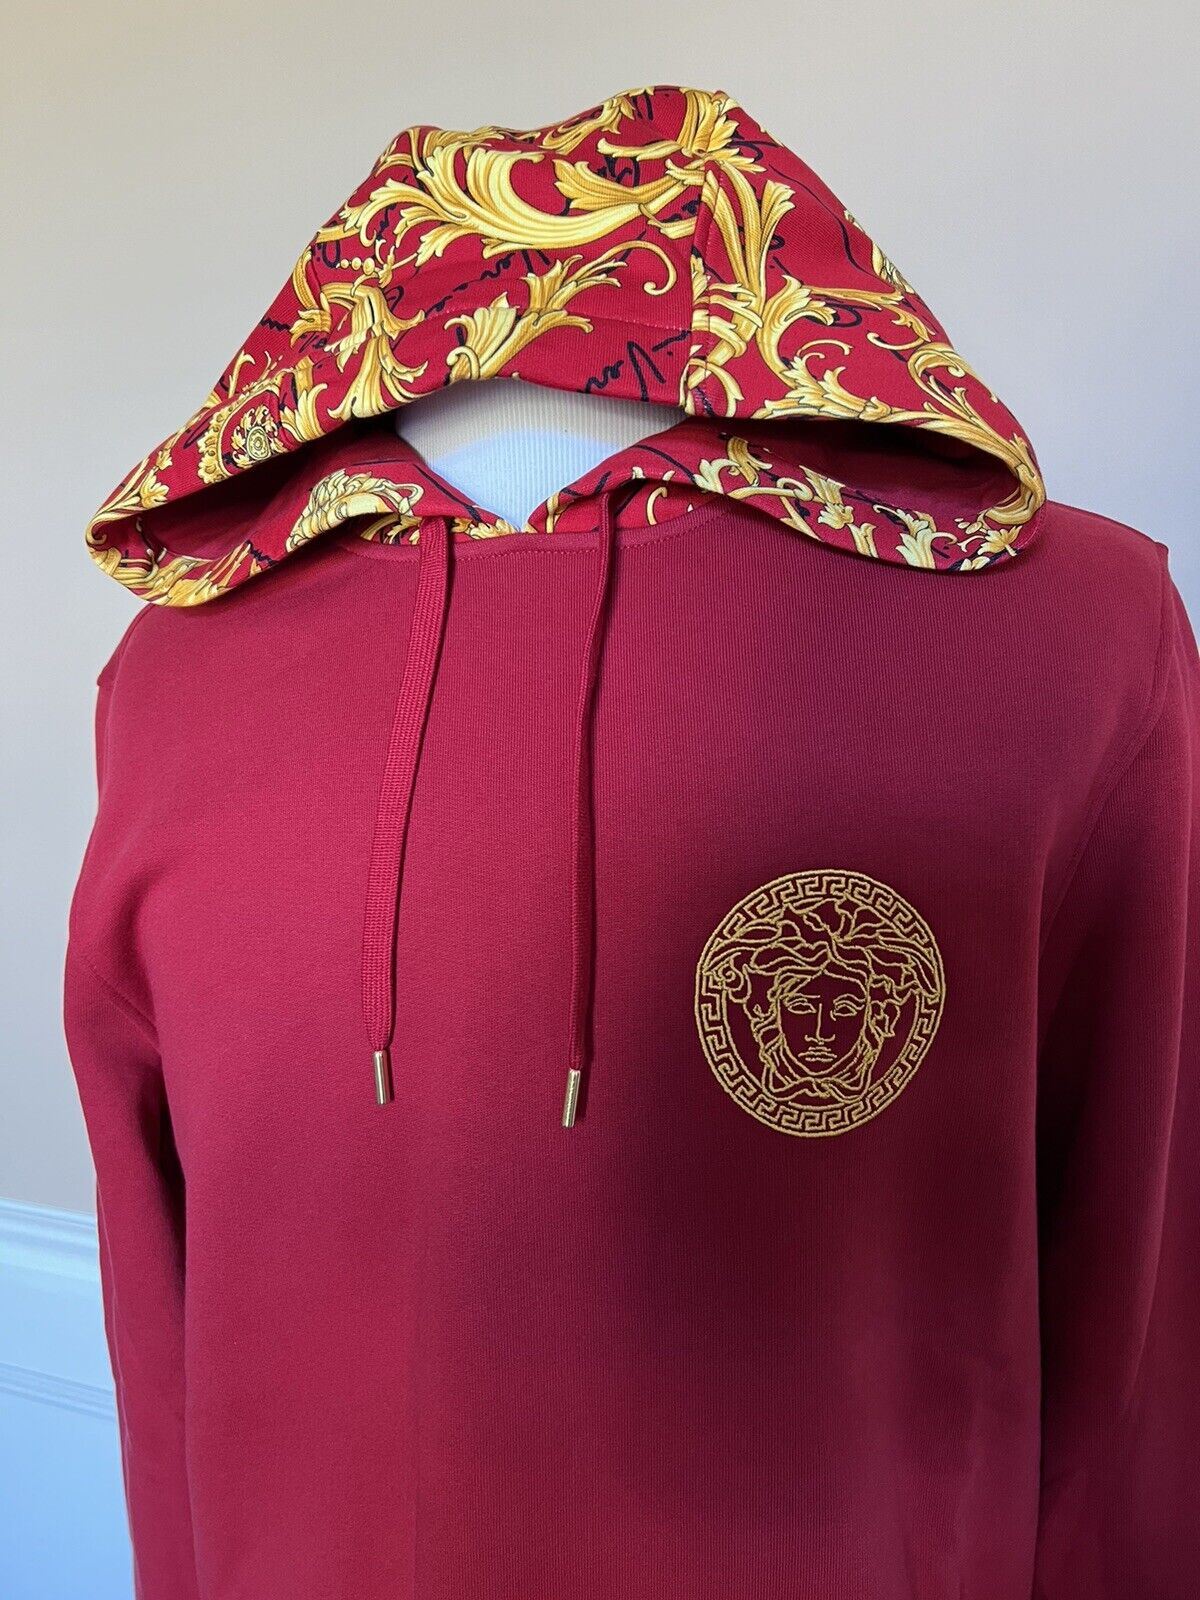 Neu mit Etikett: 1150 $ Versace Medusa Barock-Print-Sweatshirt mit Kapuze, Rot S 1003253 